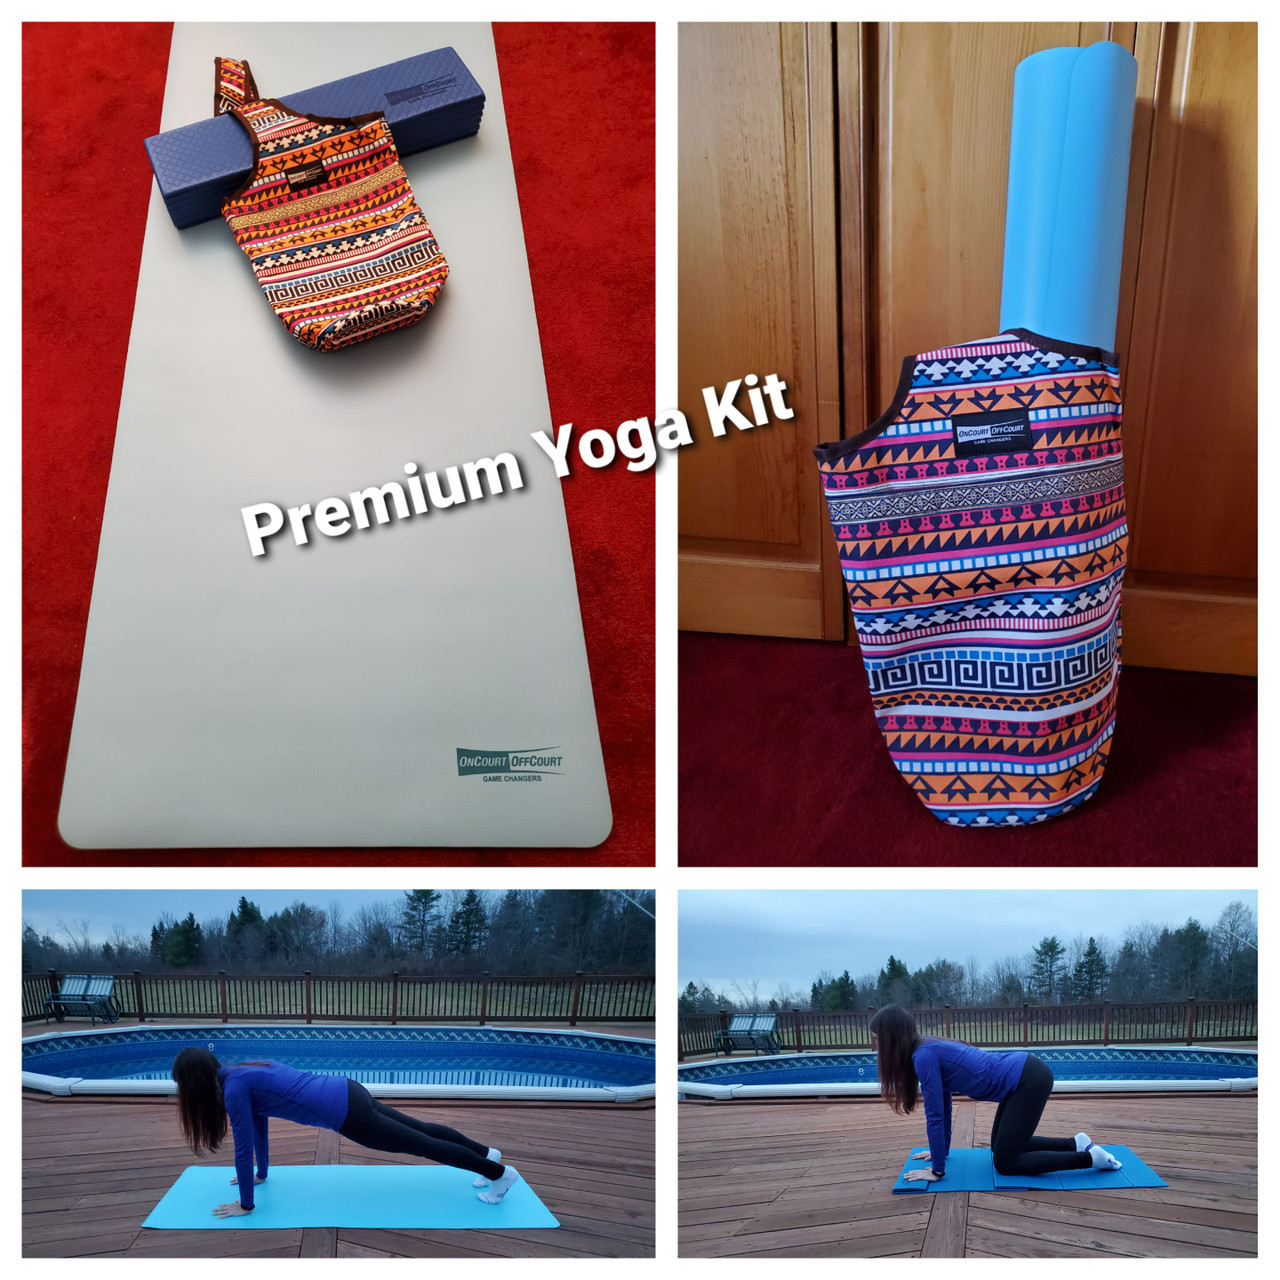 Premium Yoga Kit  OnCourt OffCourt